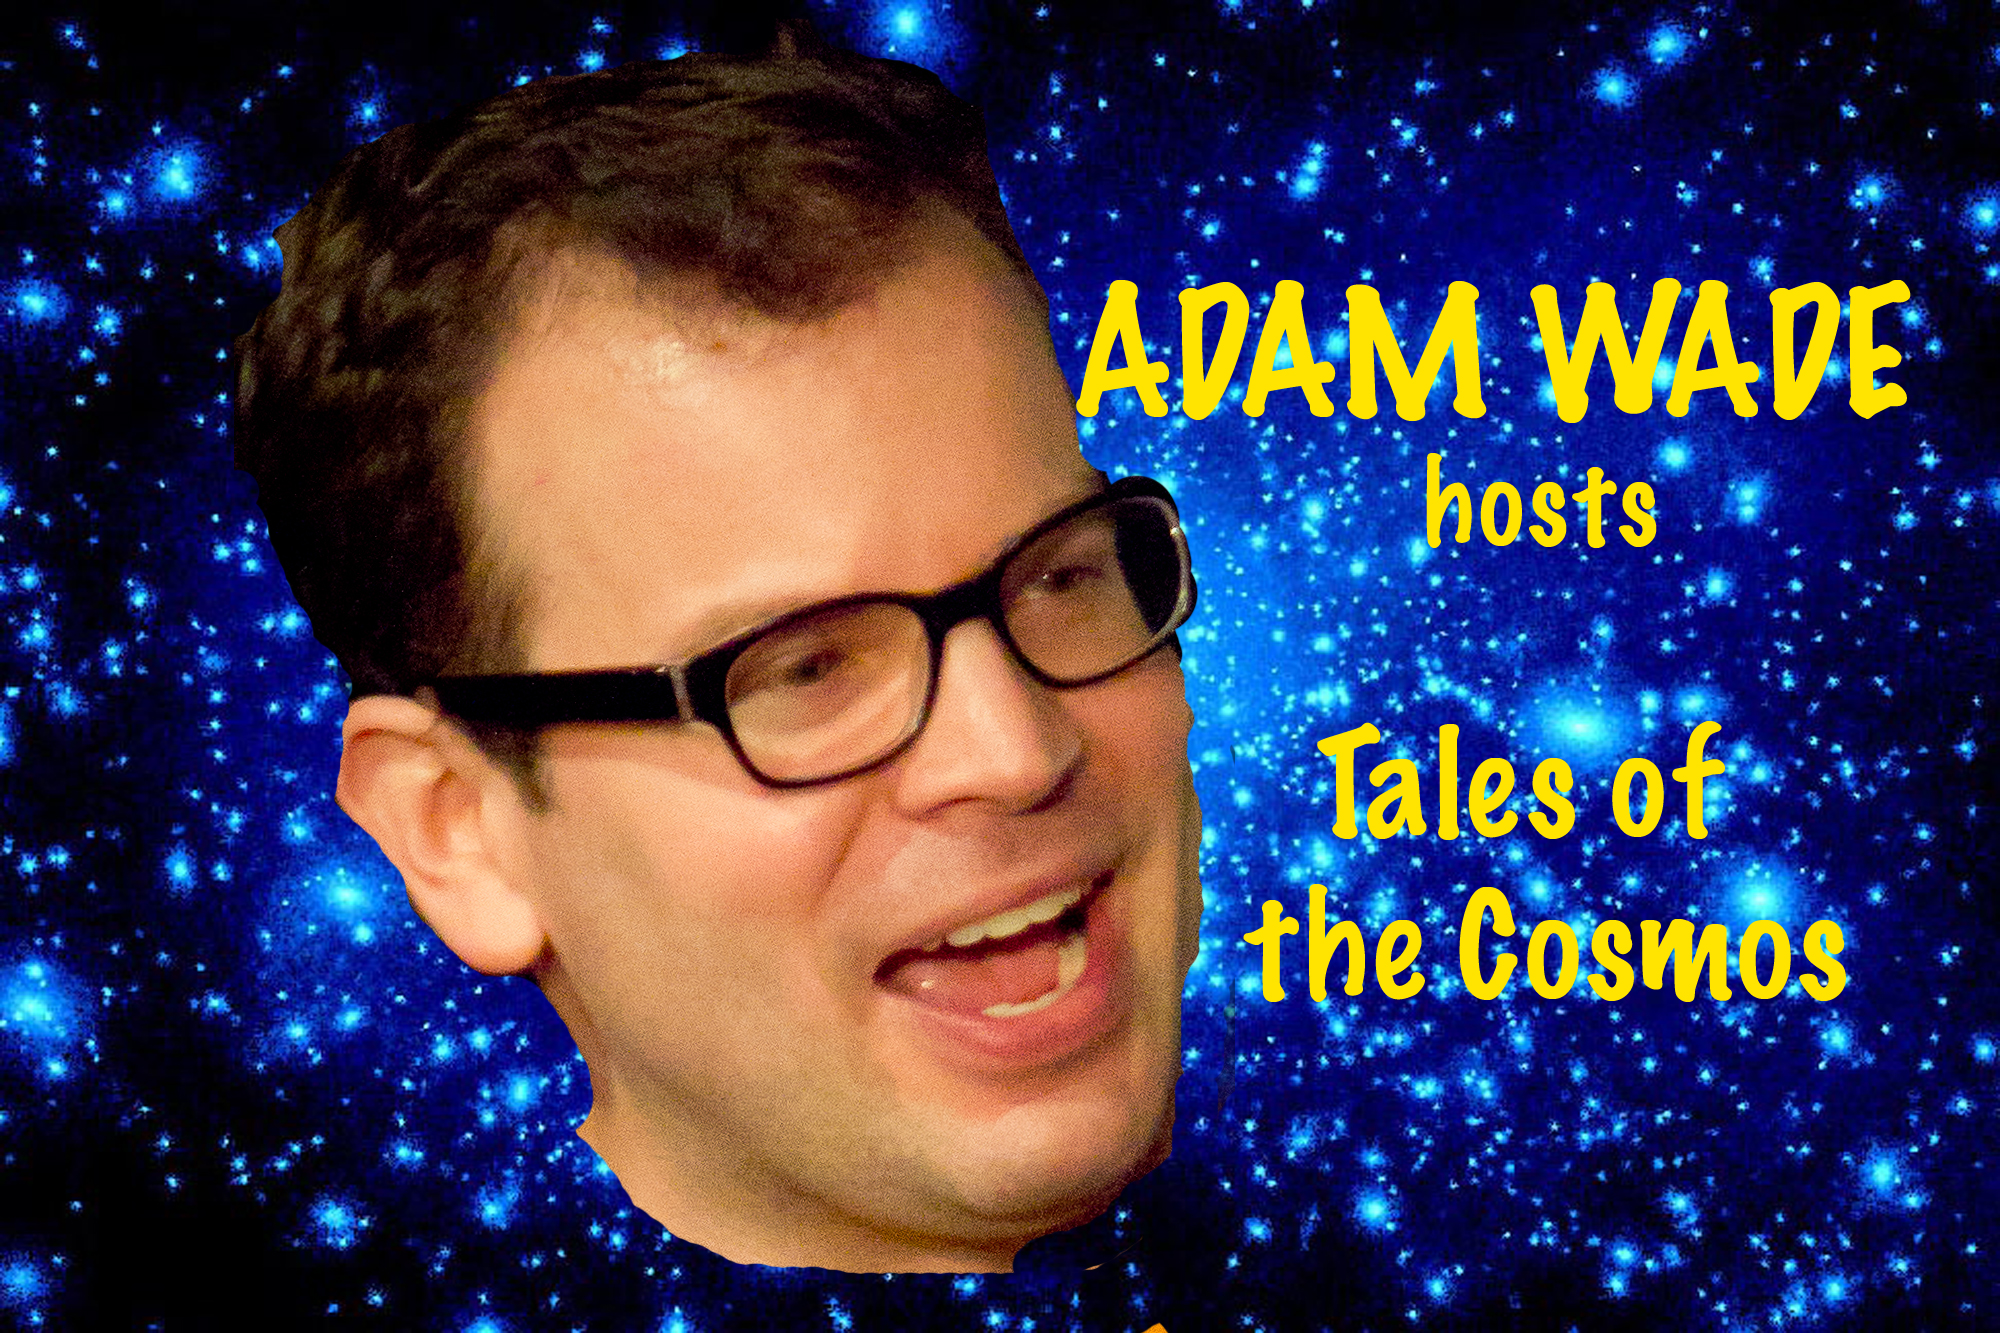 Adam Wade's Tales of the Cosmos